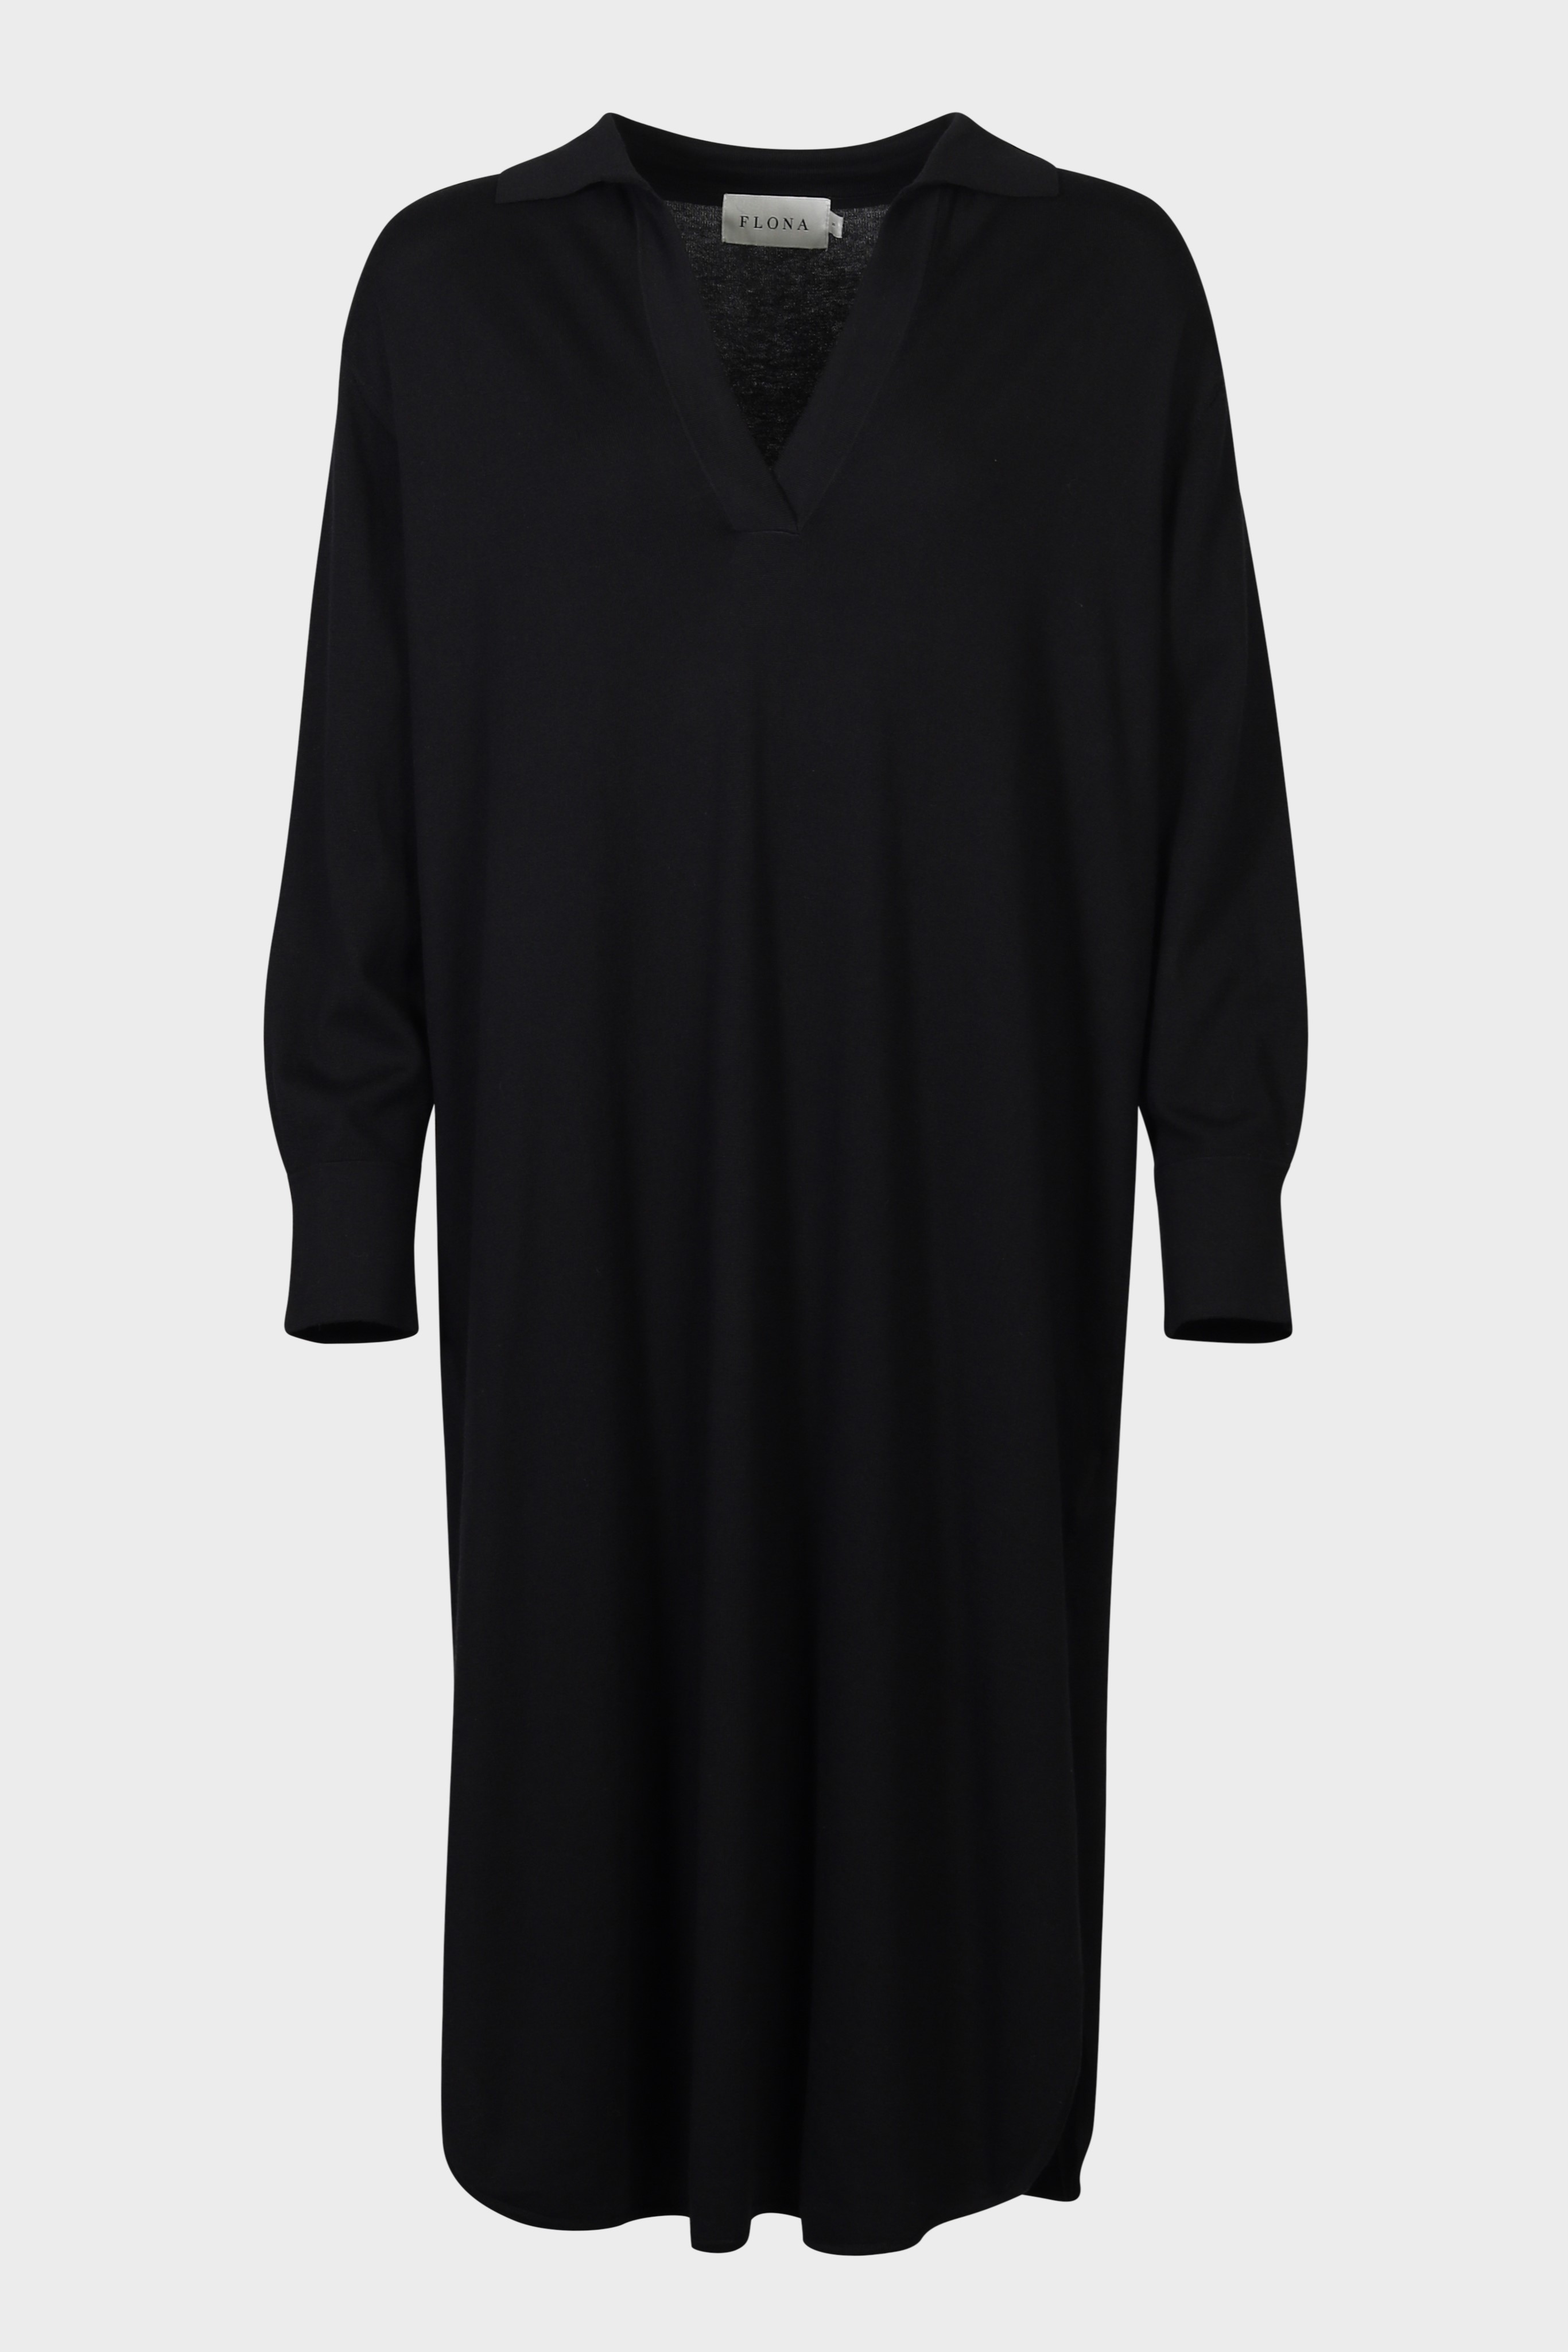 FLONA Cotton/ Cashmere Knit Dress in Black